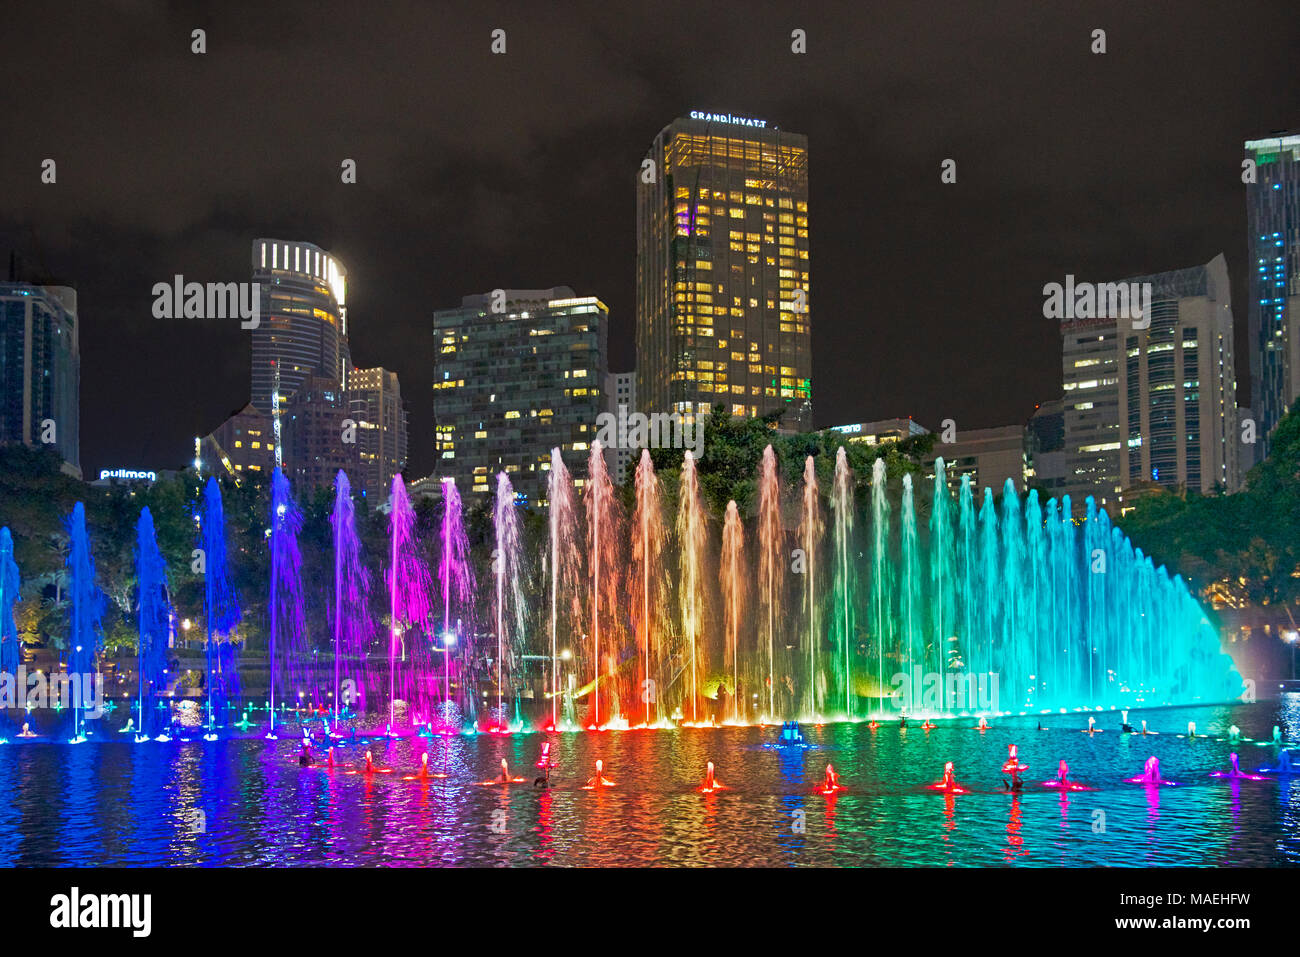 Multi coloured fountains and city skyscrapers at night Kuala Lumpur Malaysia Stock Photo